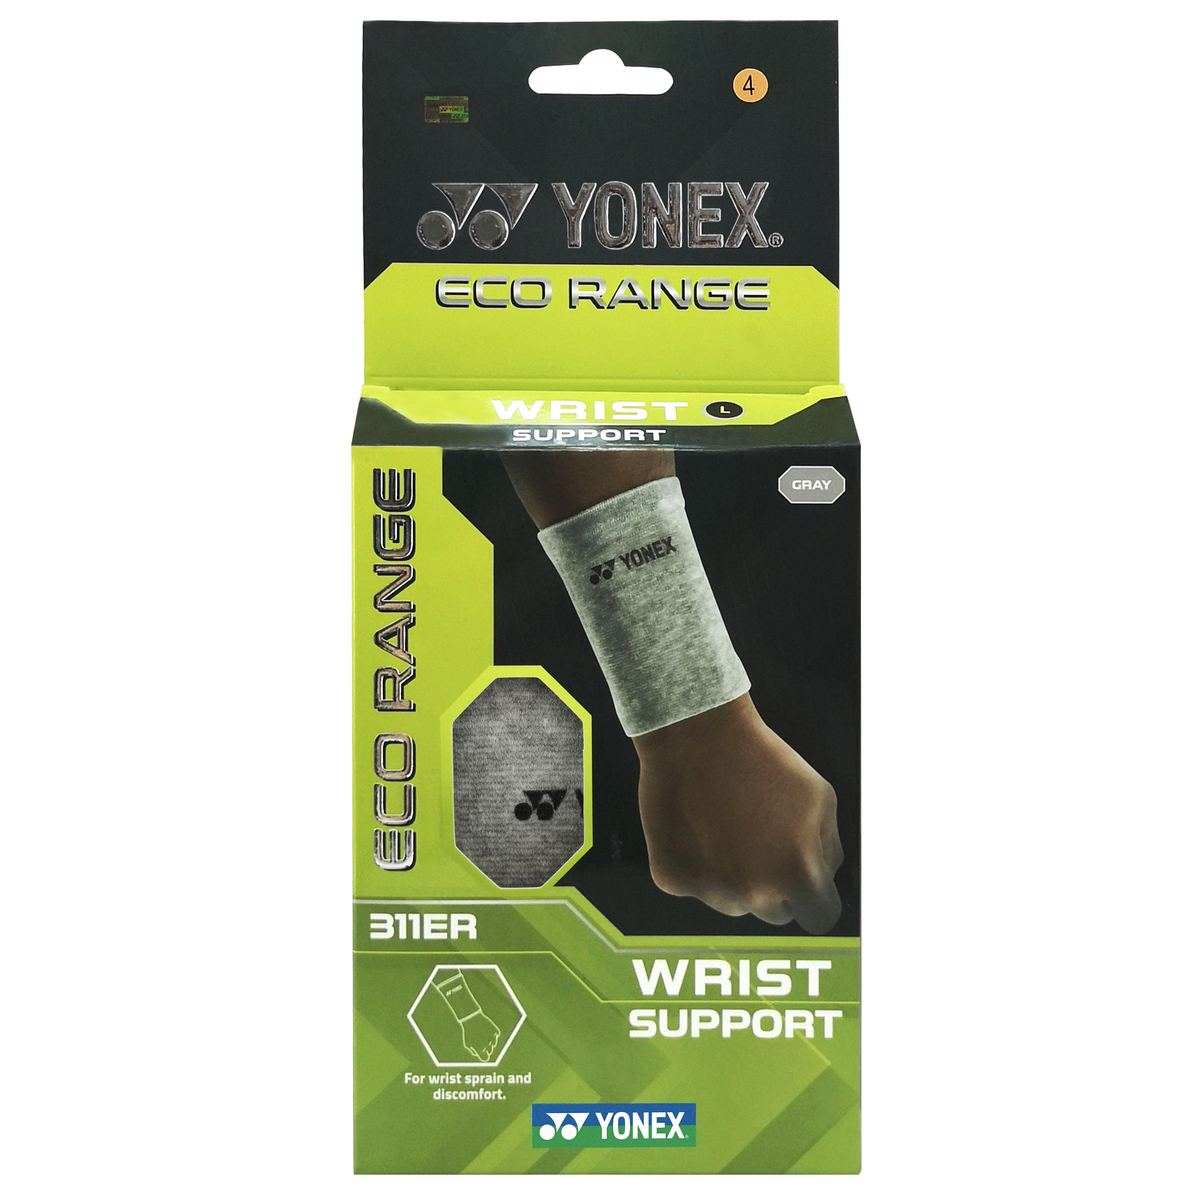 Yonex Wrist Support 311ER L/Grey